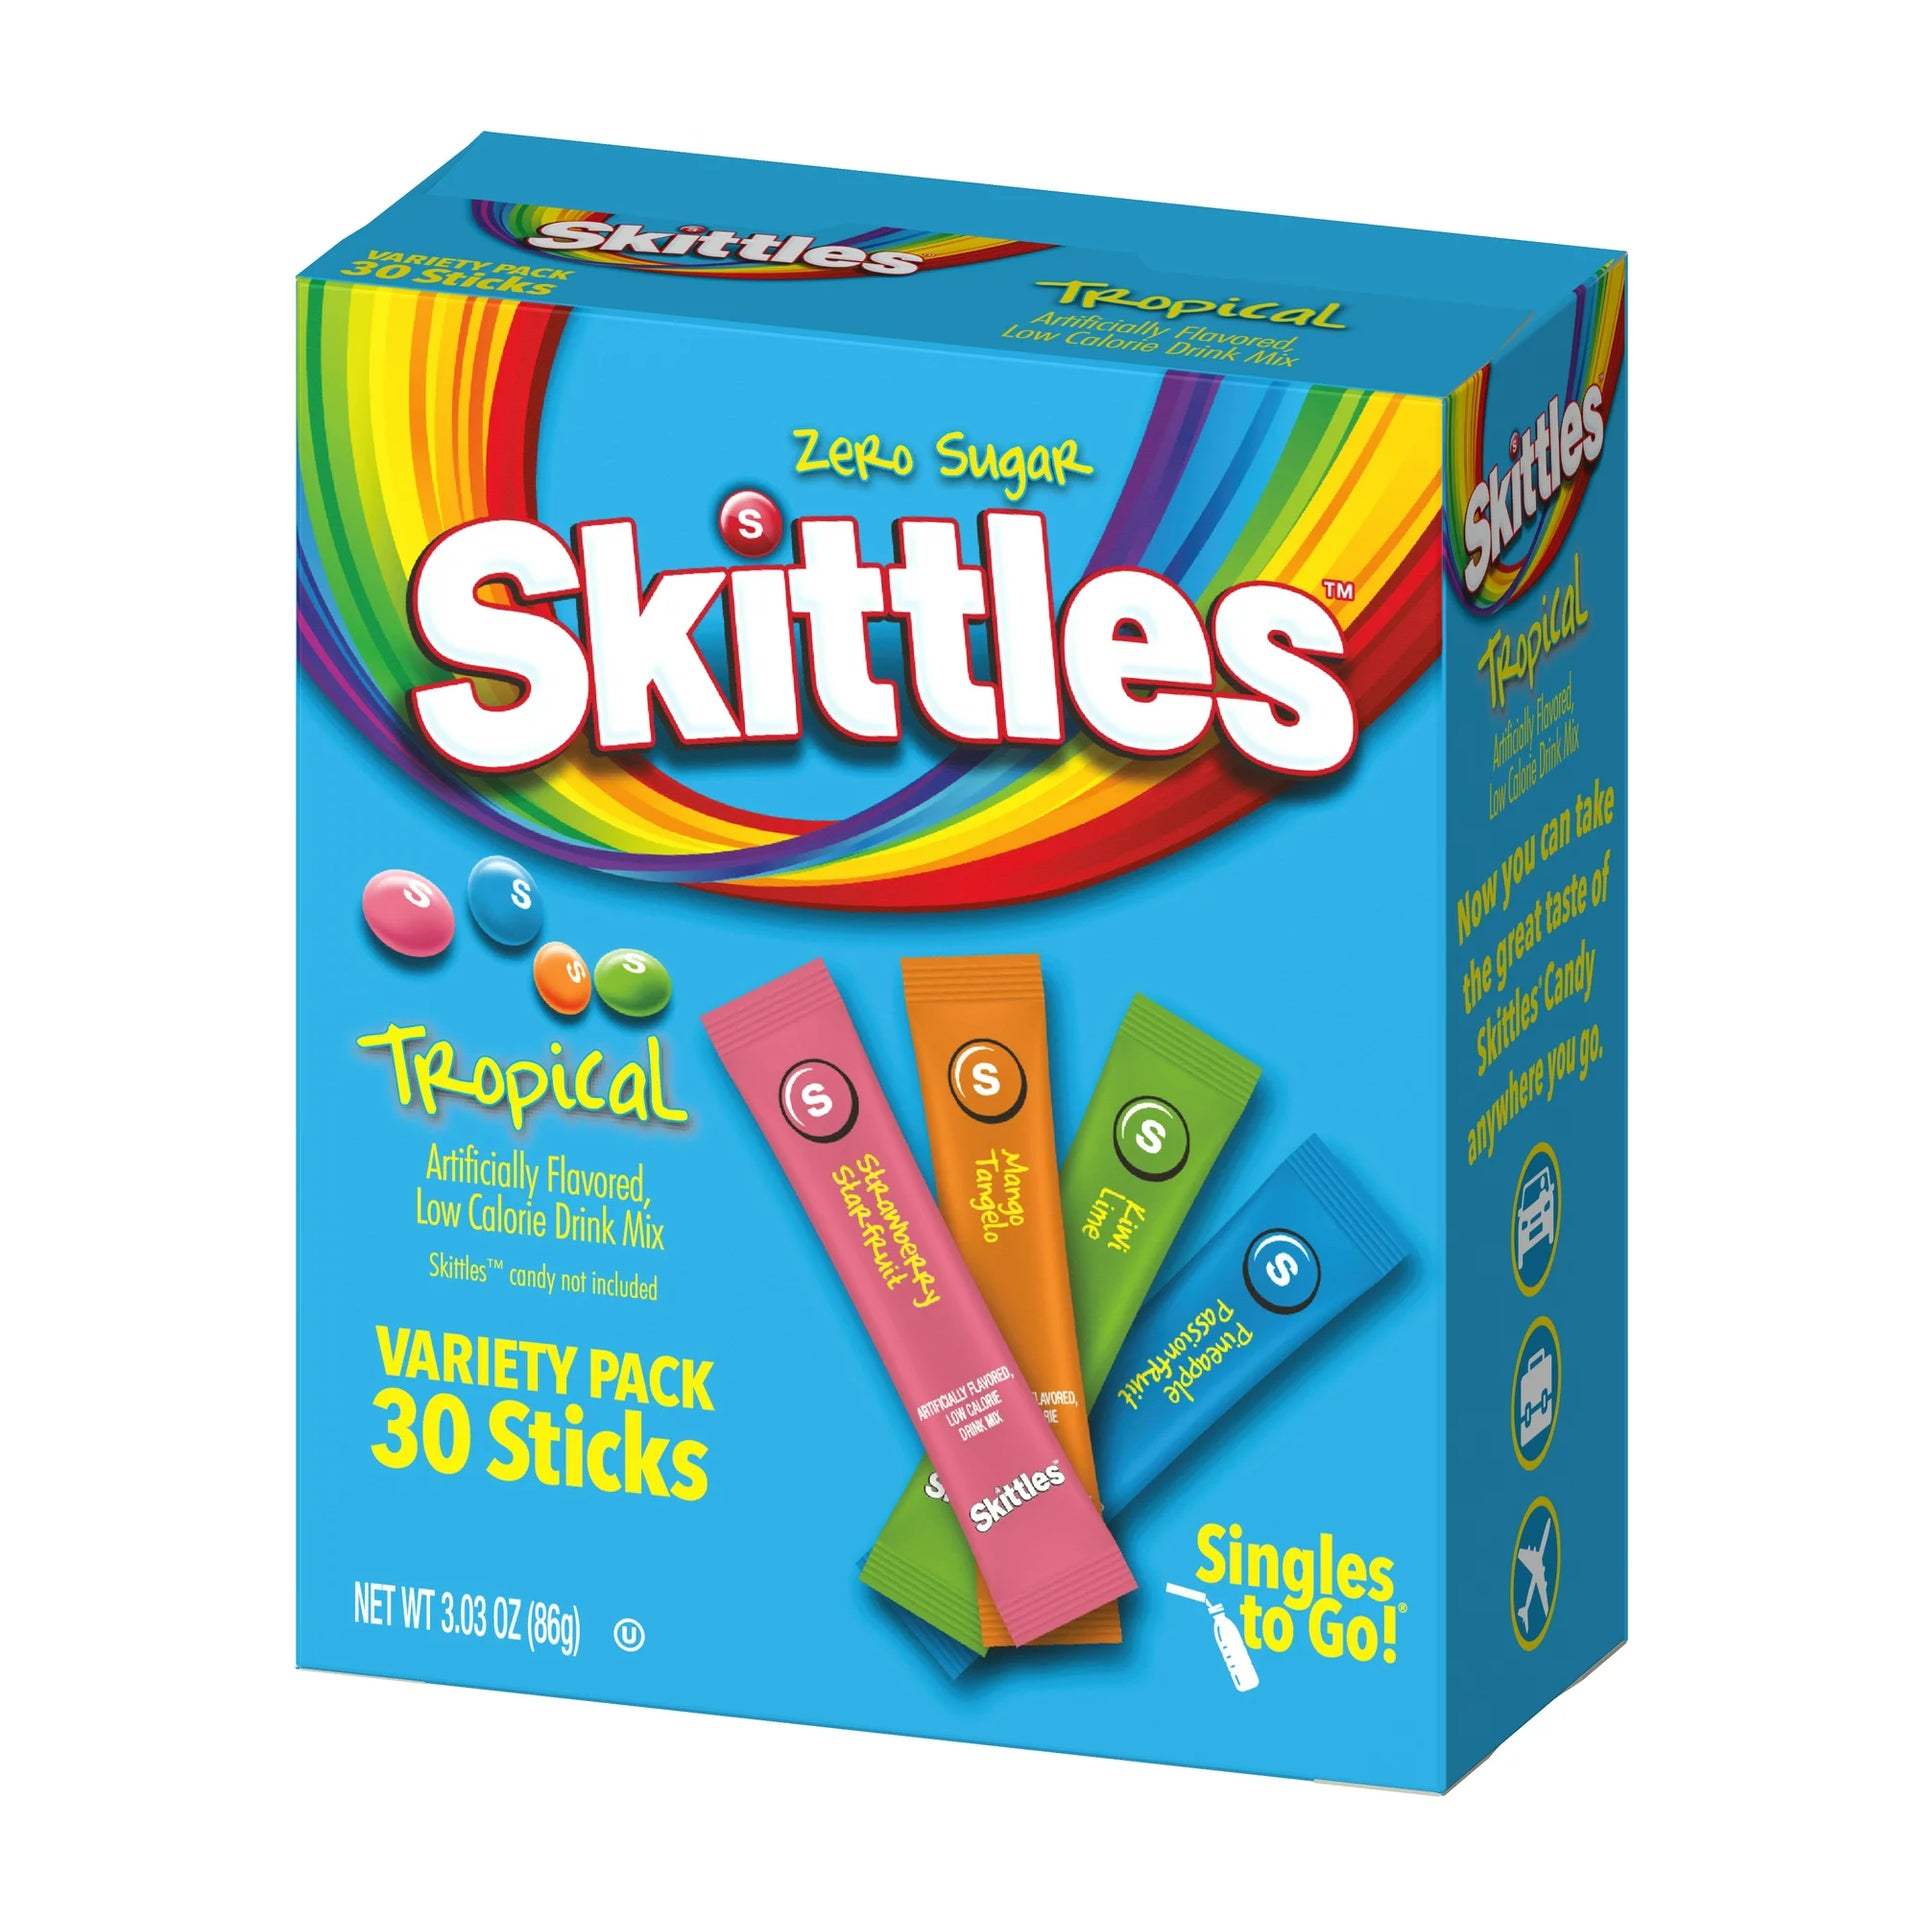 Skittles Drinks Mix Tropical Zero Sugar (USA)